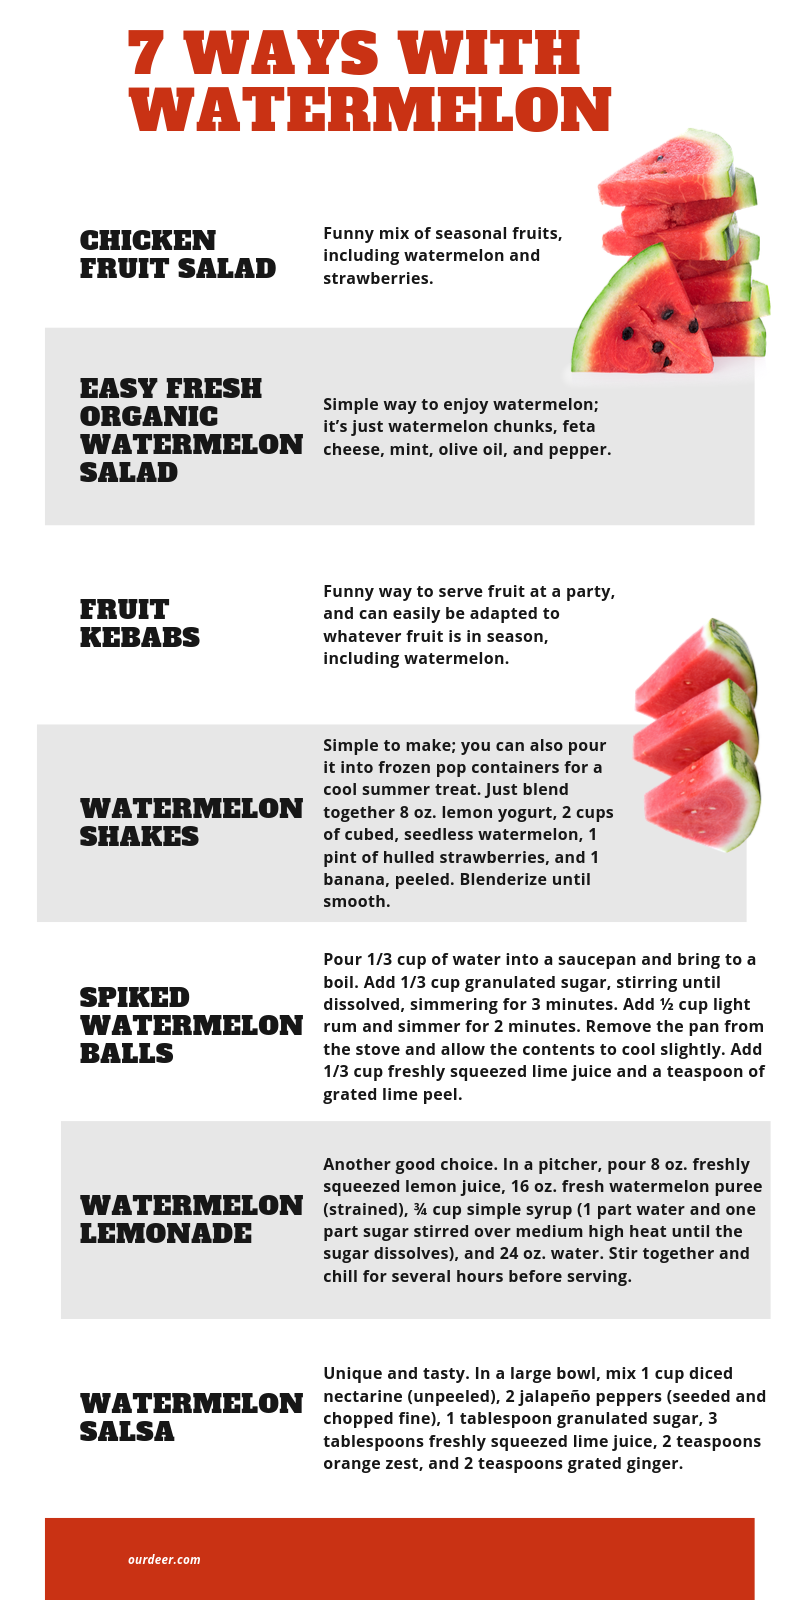 Recipes for Watermelon